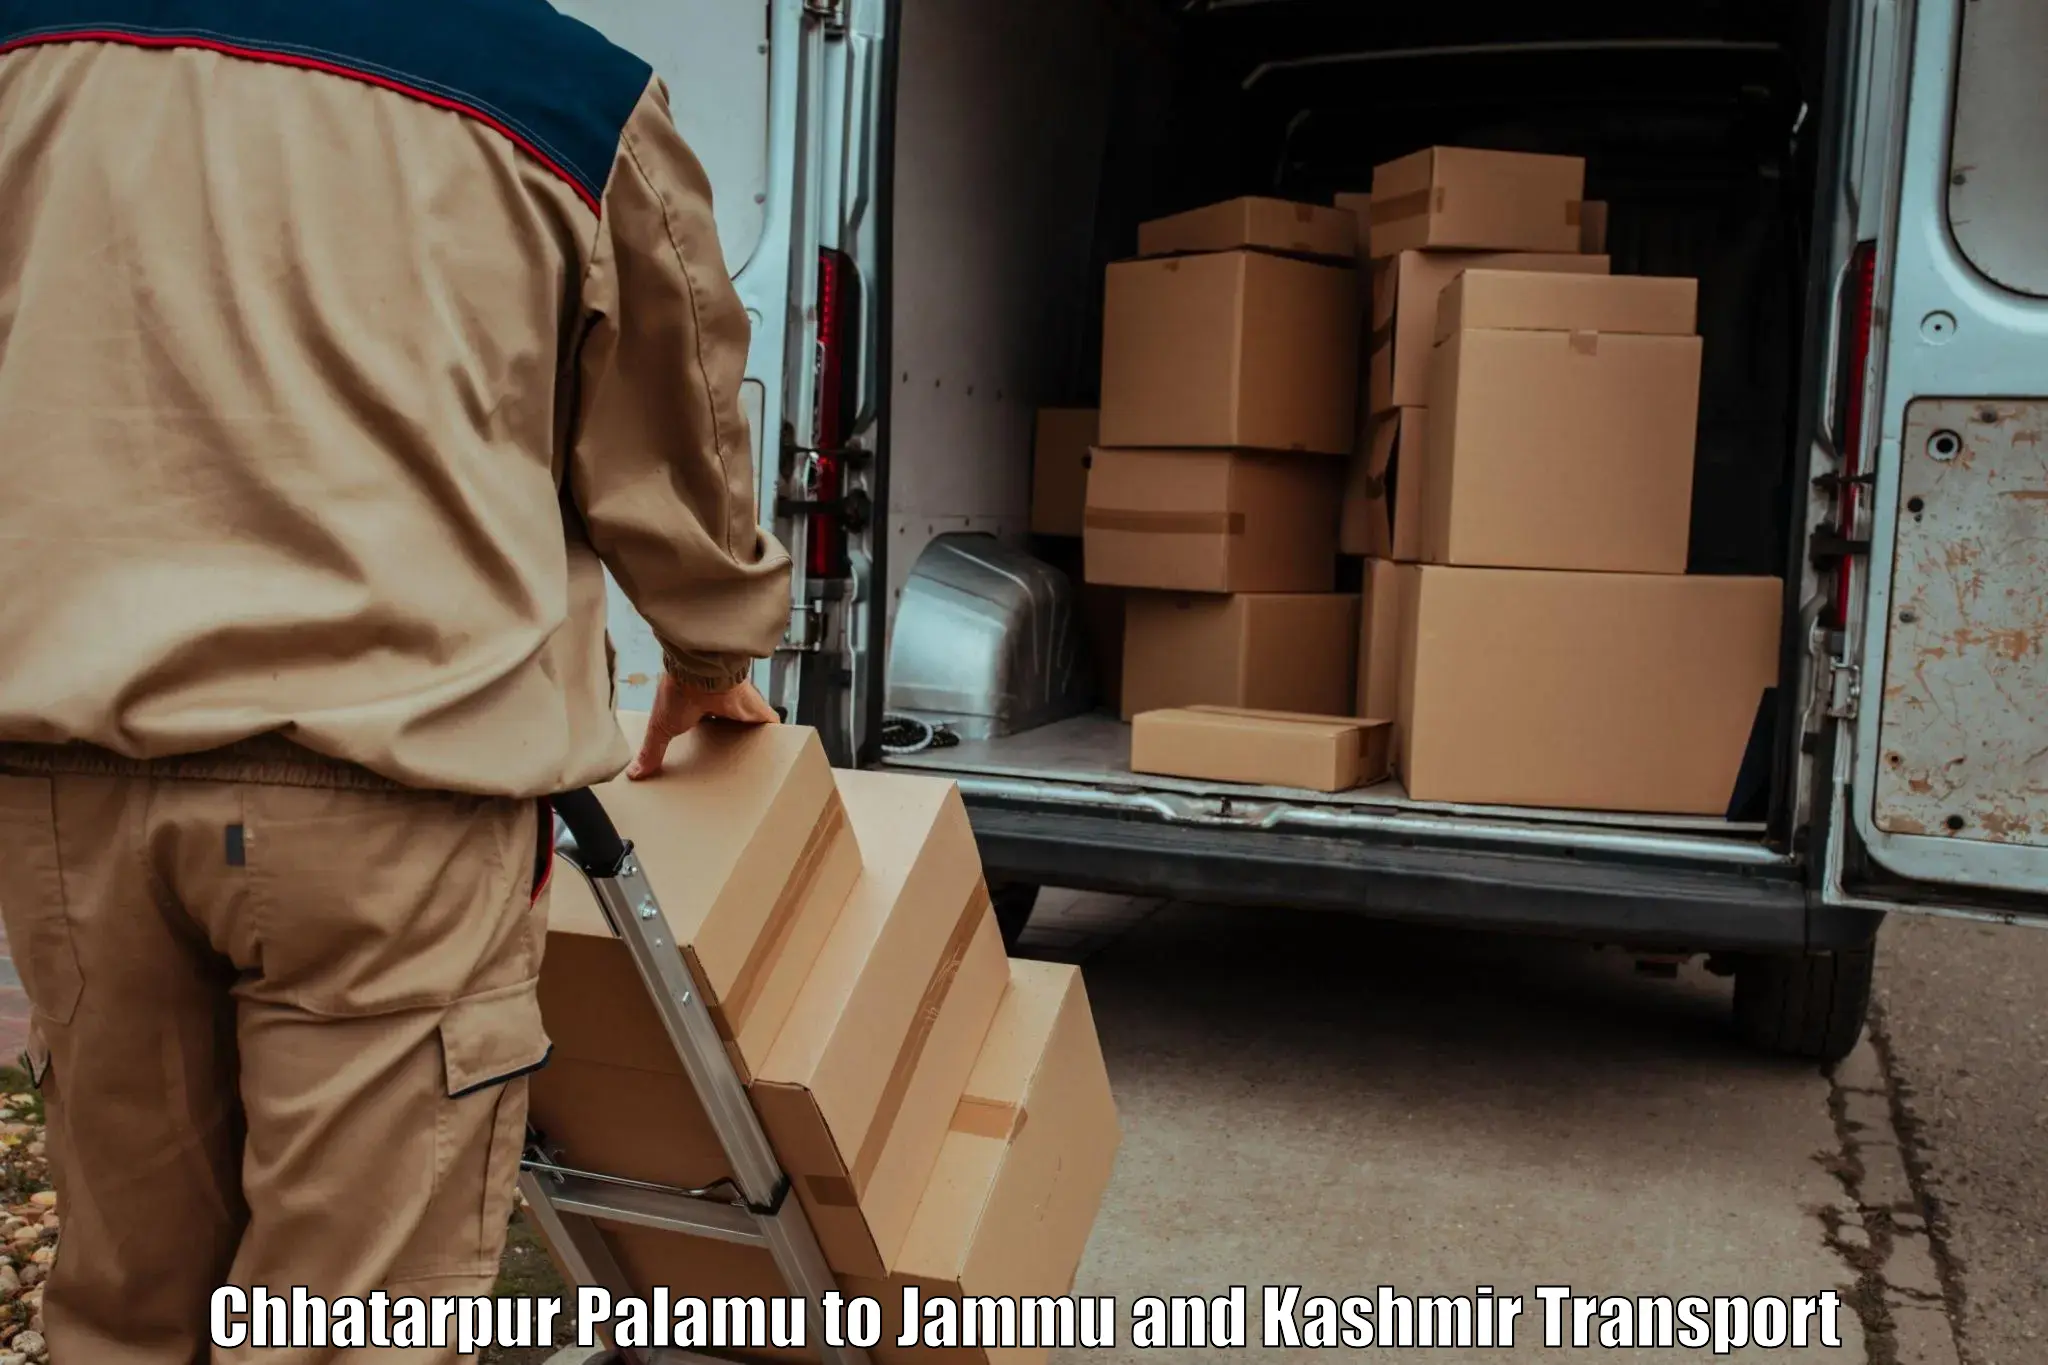 Furniture transport service Chhatarpur Palamu to Shopian